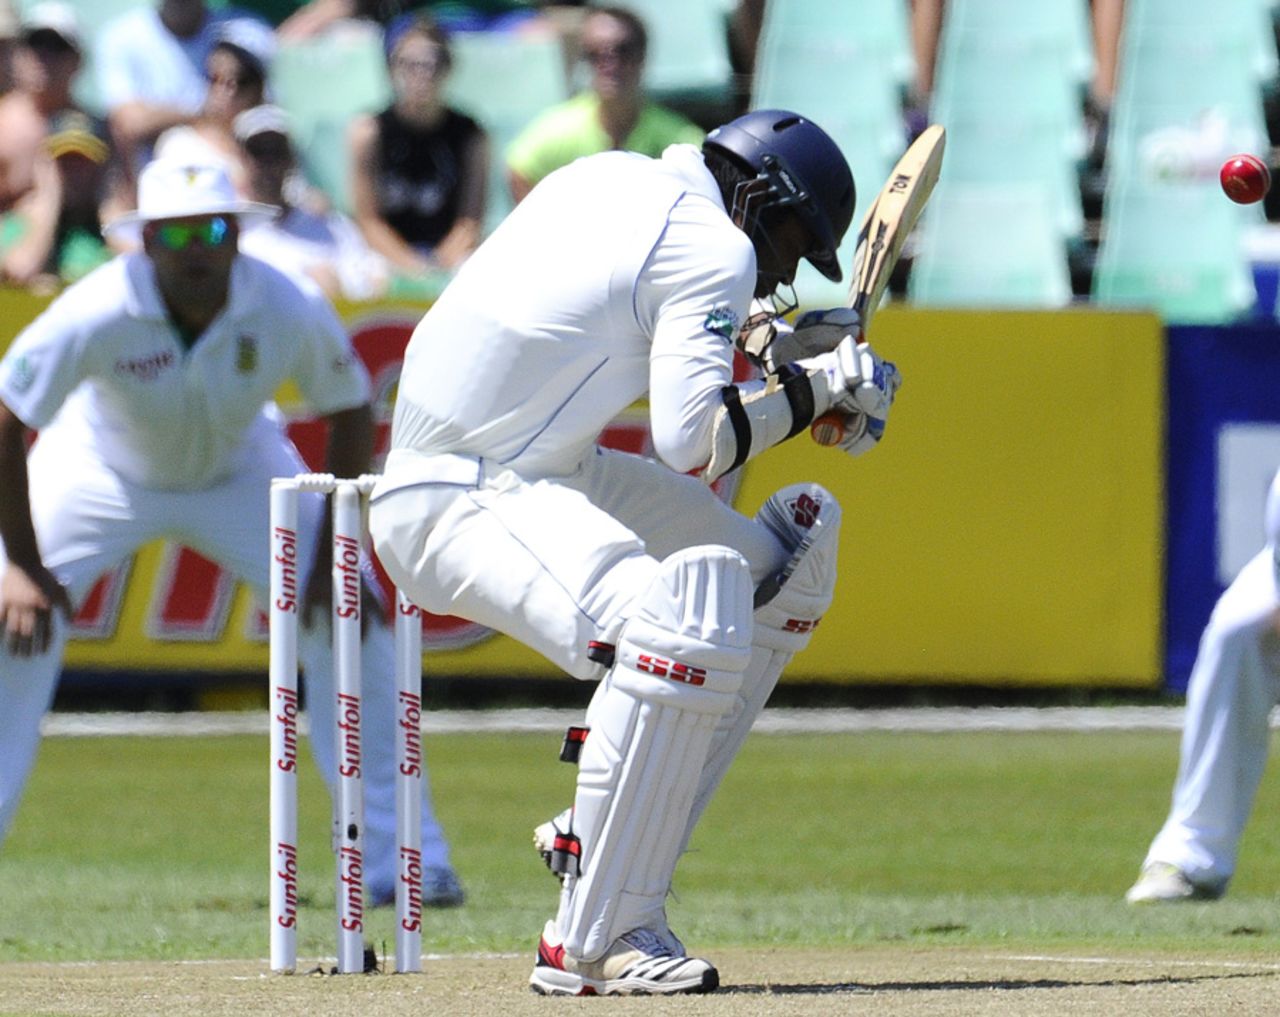 Tharanga Paranavitana tries to avoid a short delivery, South Africa v Sri Lanka, 2nd Test, Durban, 1st day, December 26, 2011